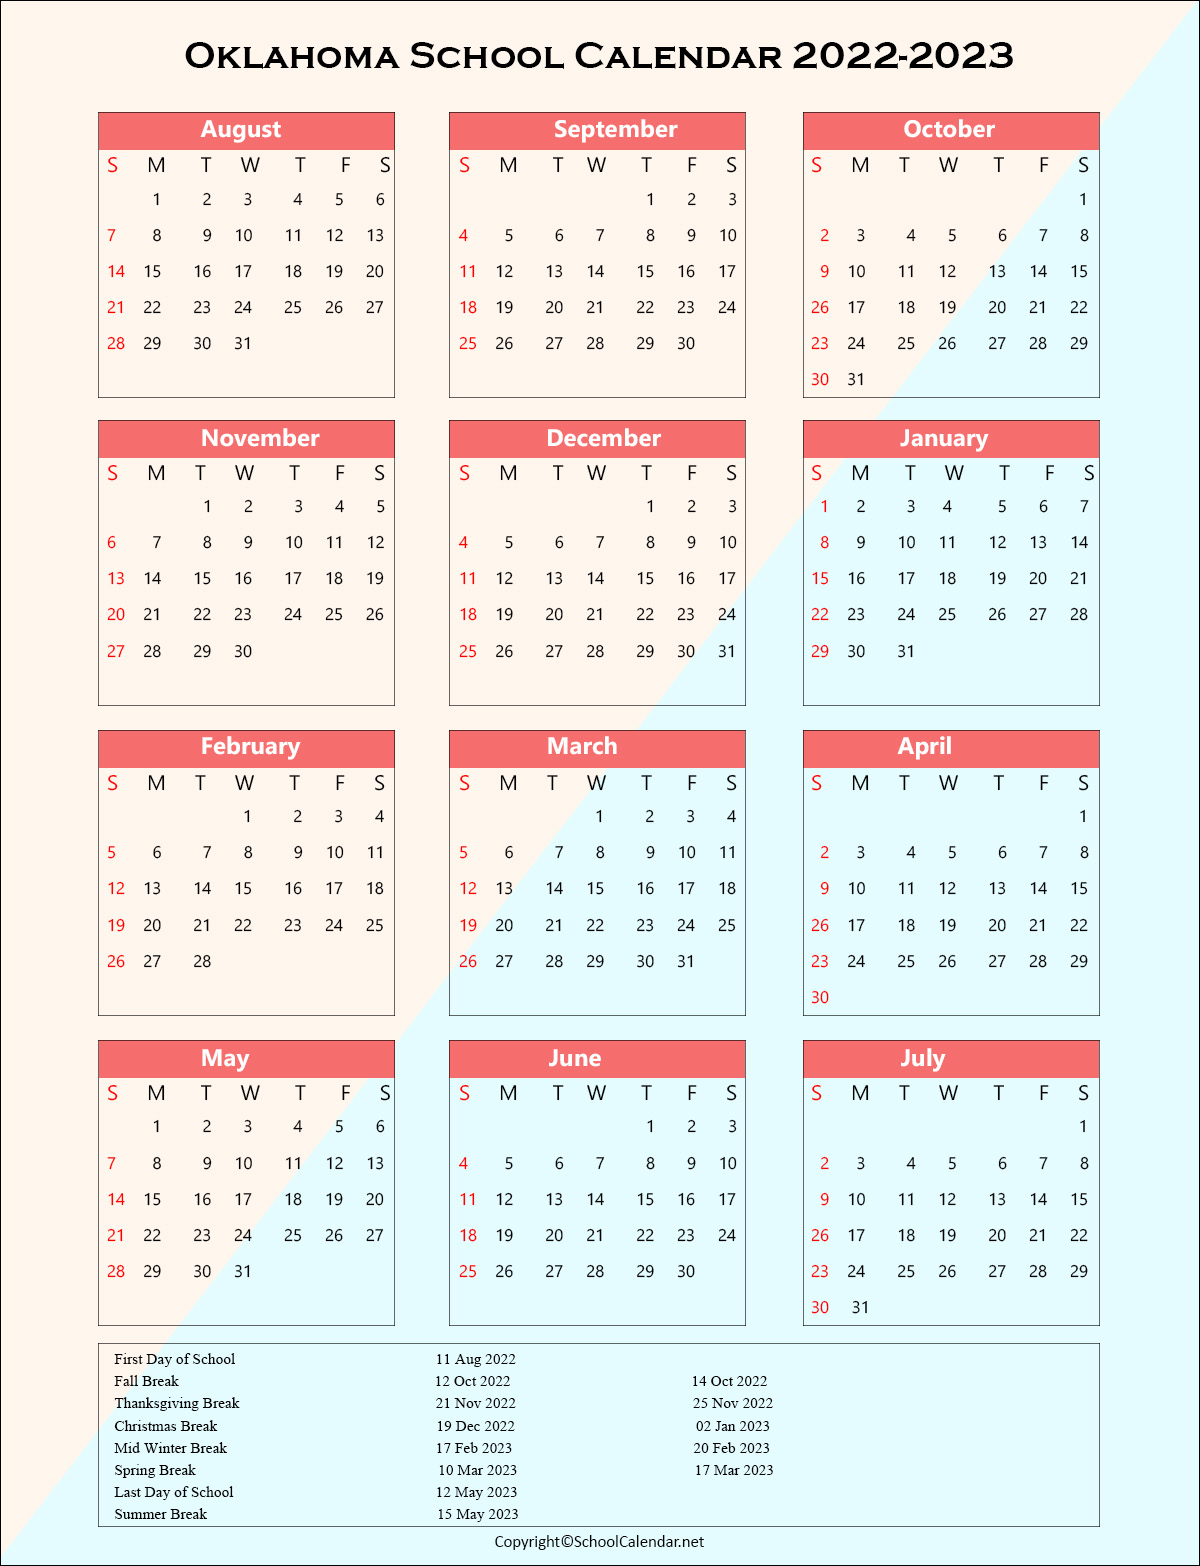 Oklahoma School Holiday Calendar 2022